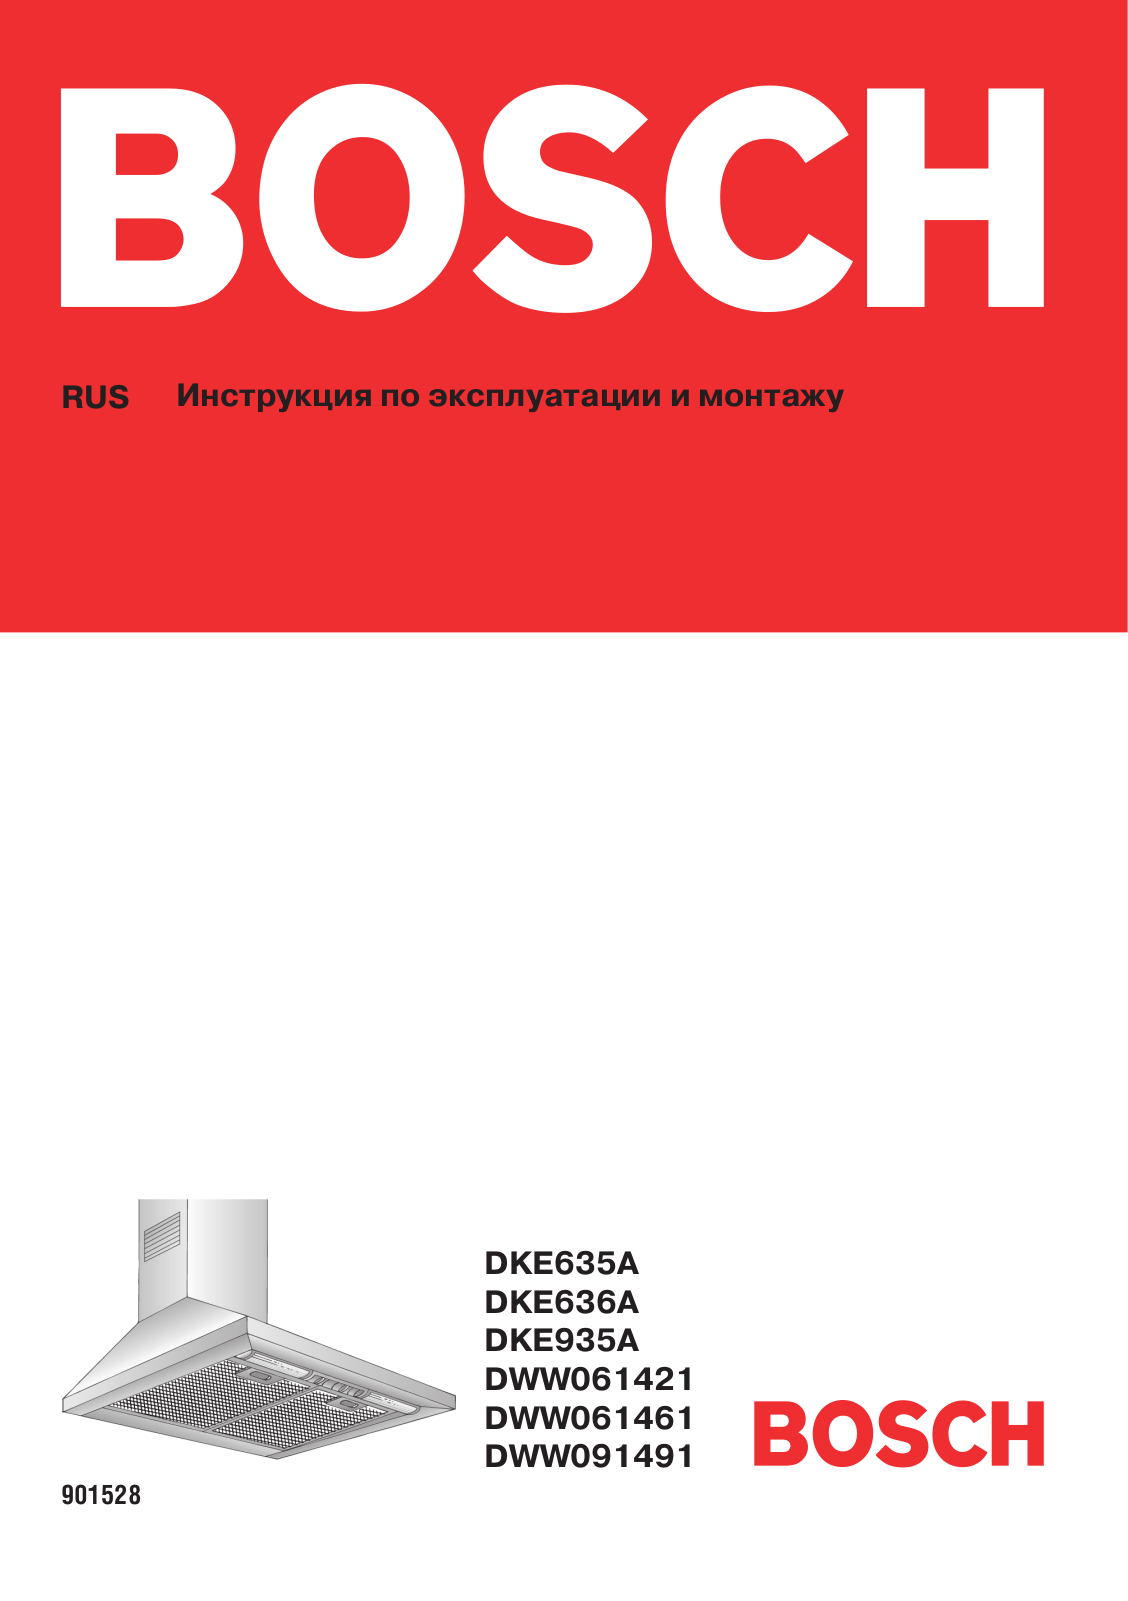 Bosch DWW 091491 User Manual